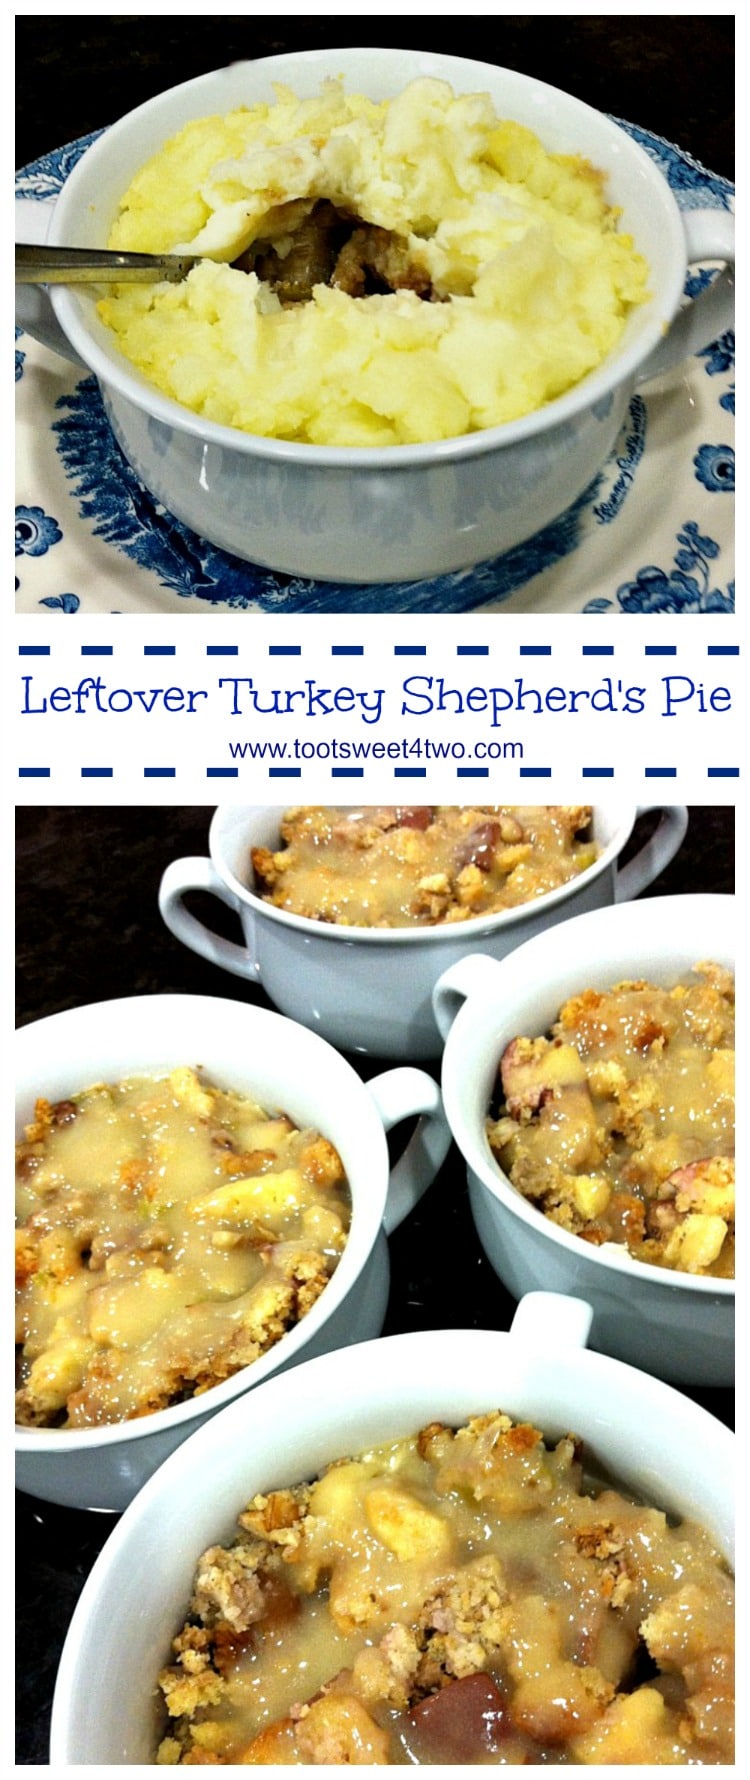 Leftover Turkey Shepherd's Pie - a Thanksgiving leftover classic